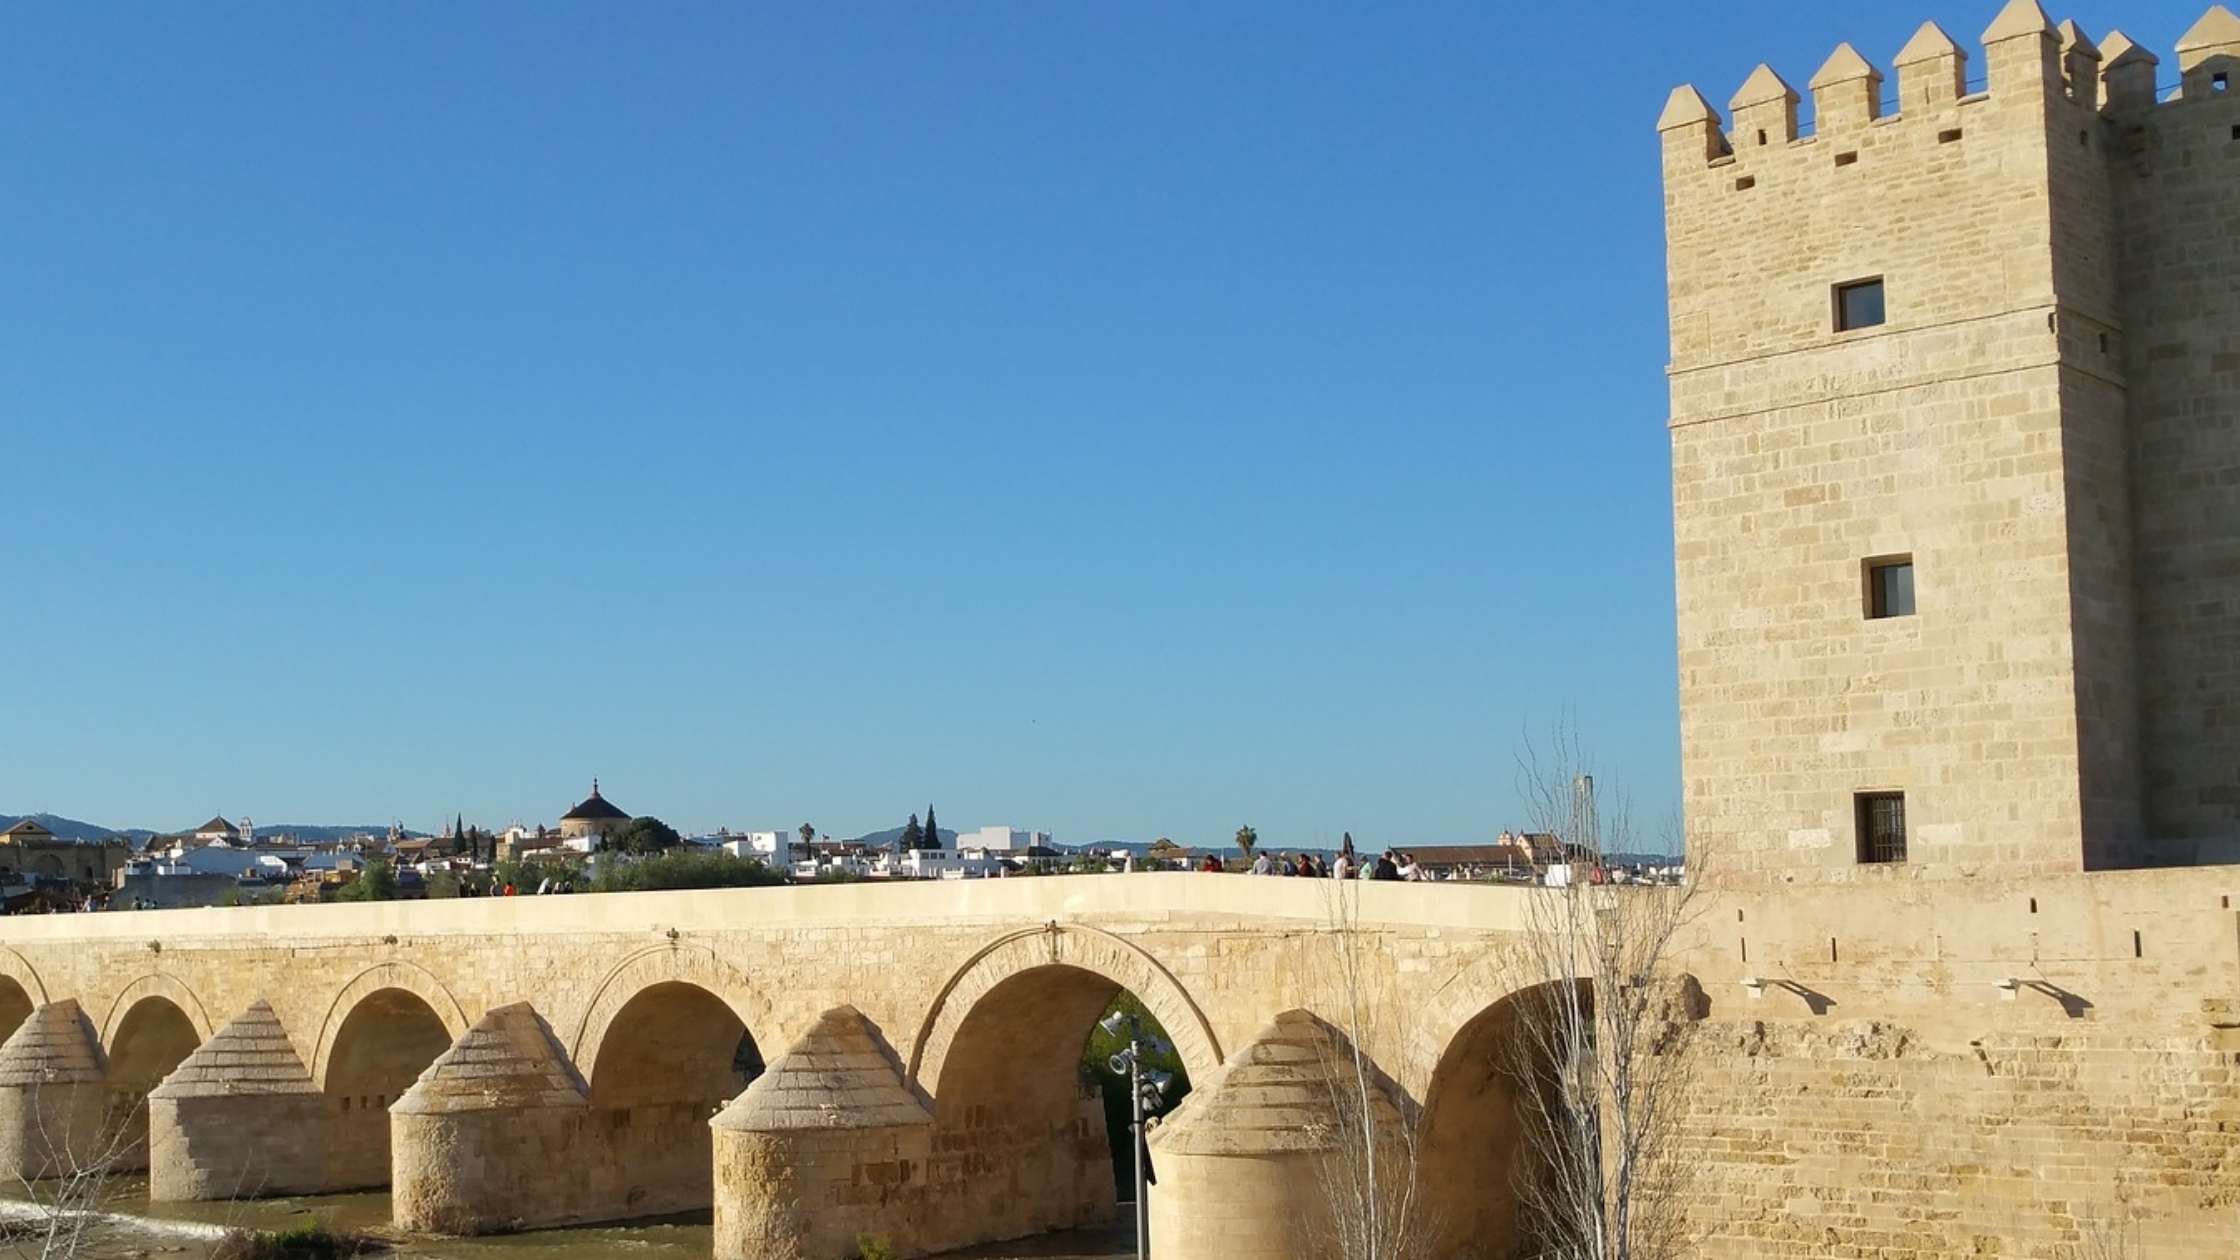 Roman bridge in Cordoba, Spain